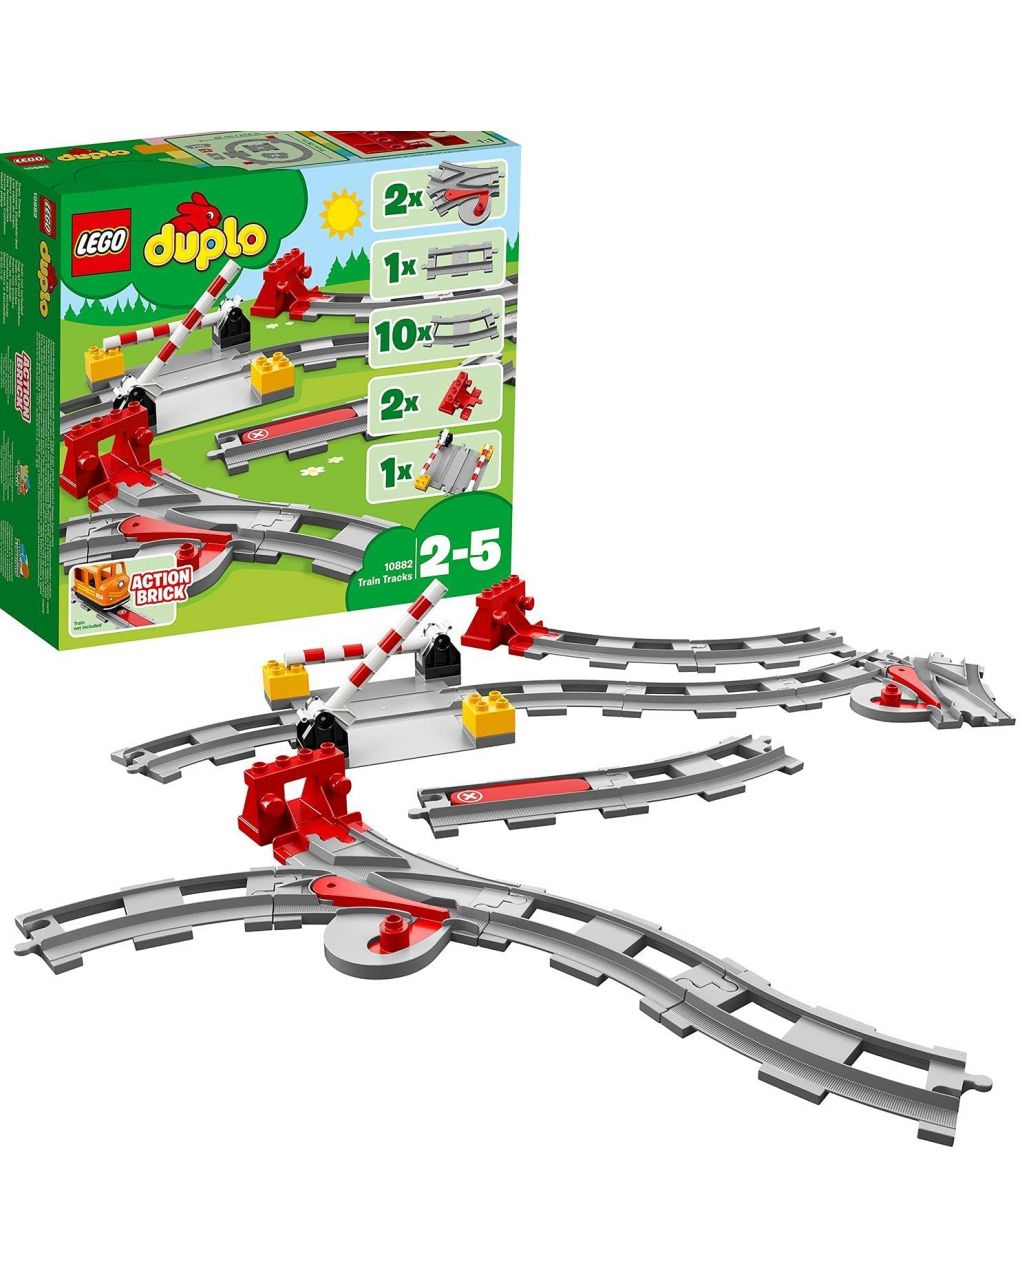 Trilhos da lego duplo - 10882 - LEGO Duplo